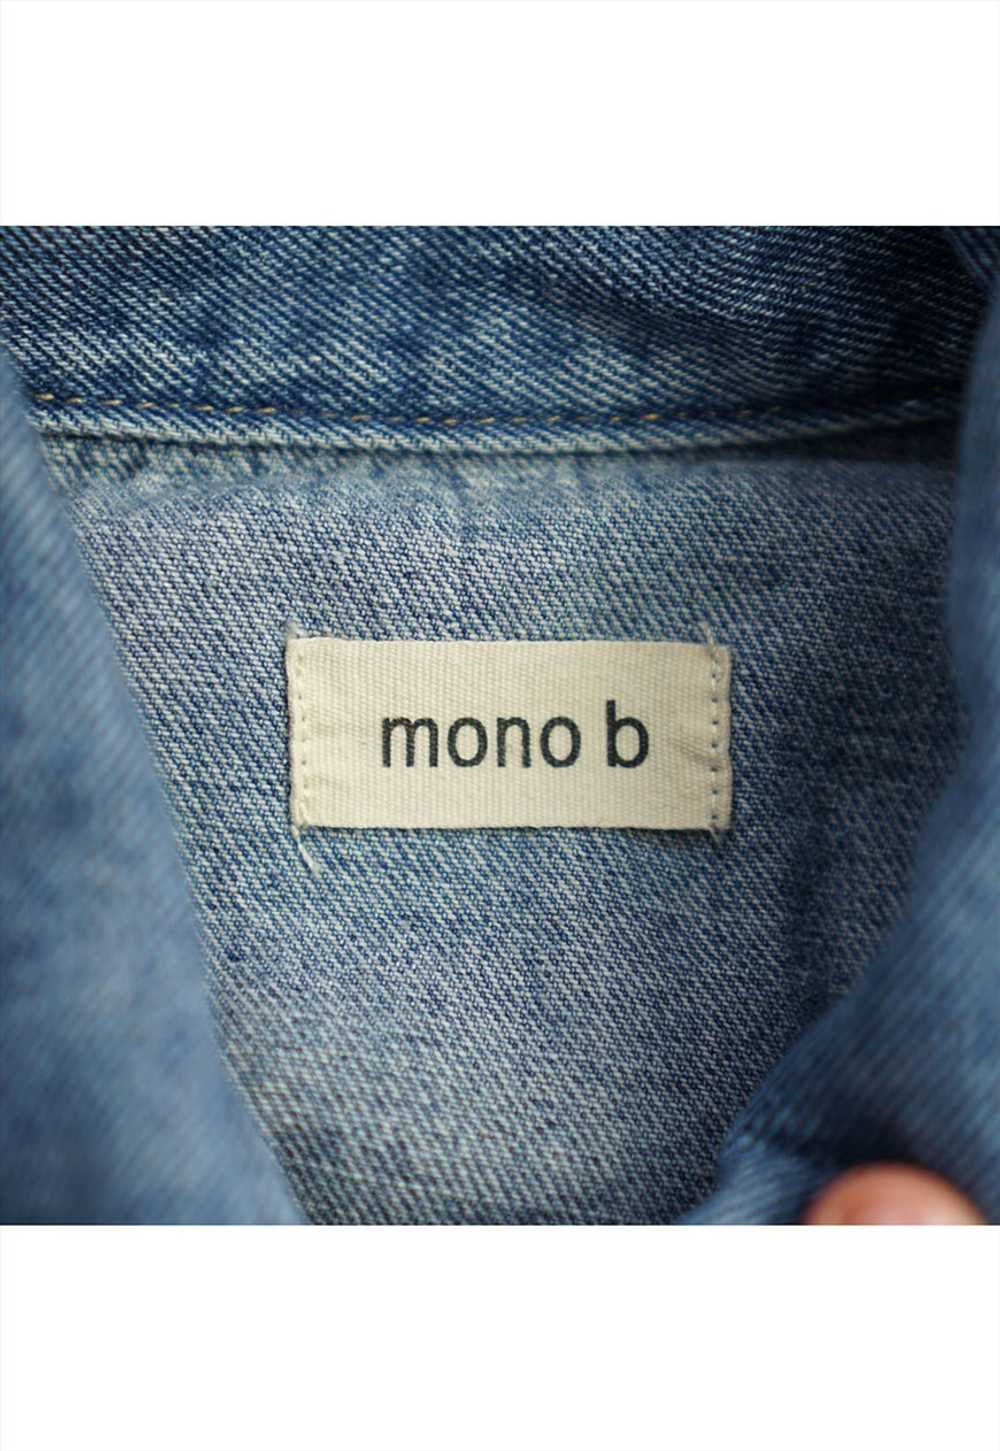 Vintage Mono B Cropped Denim Jacket Womens - image 4